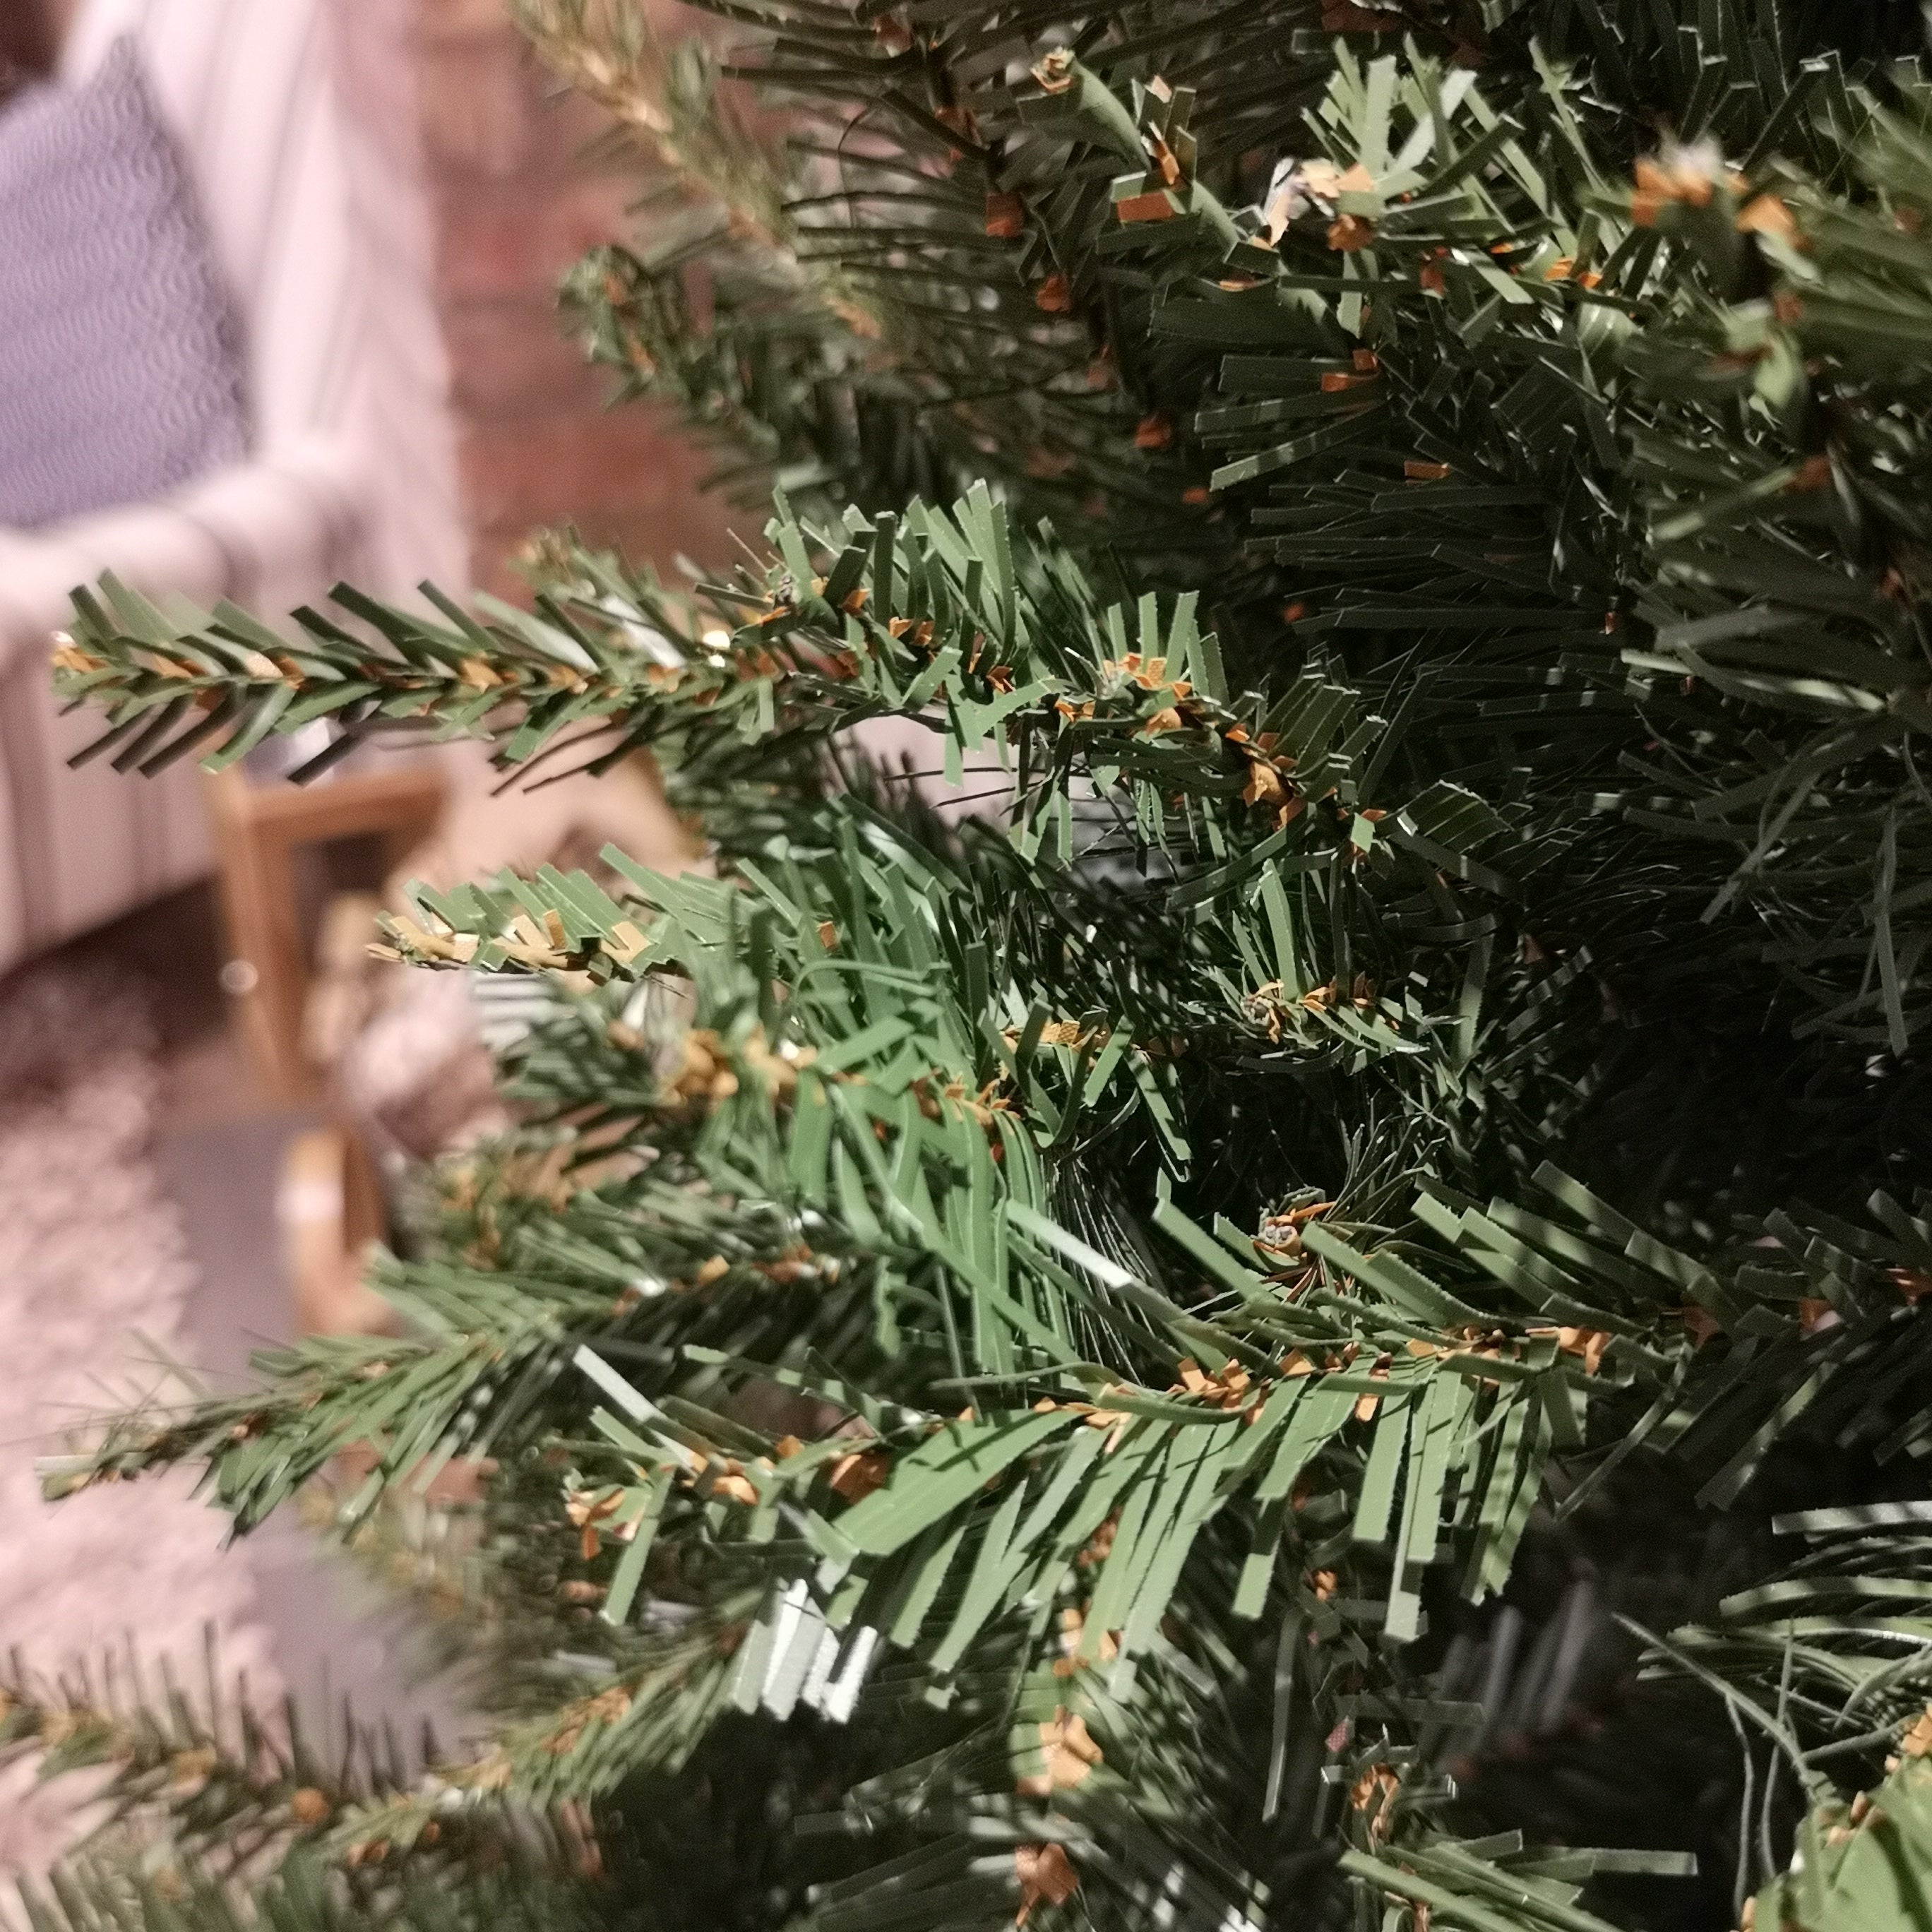 Premier 6ft Slim Festive California Green Christmas Tree PVC Hinged